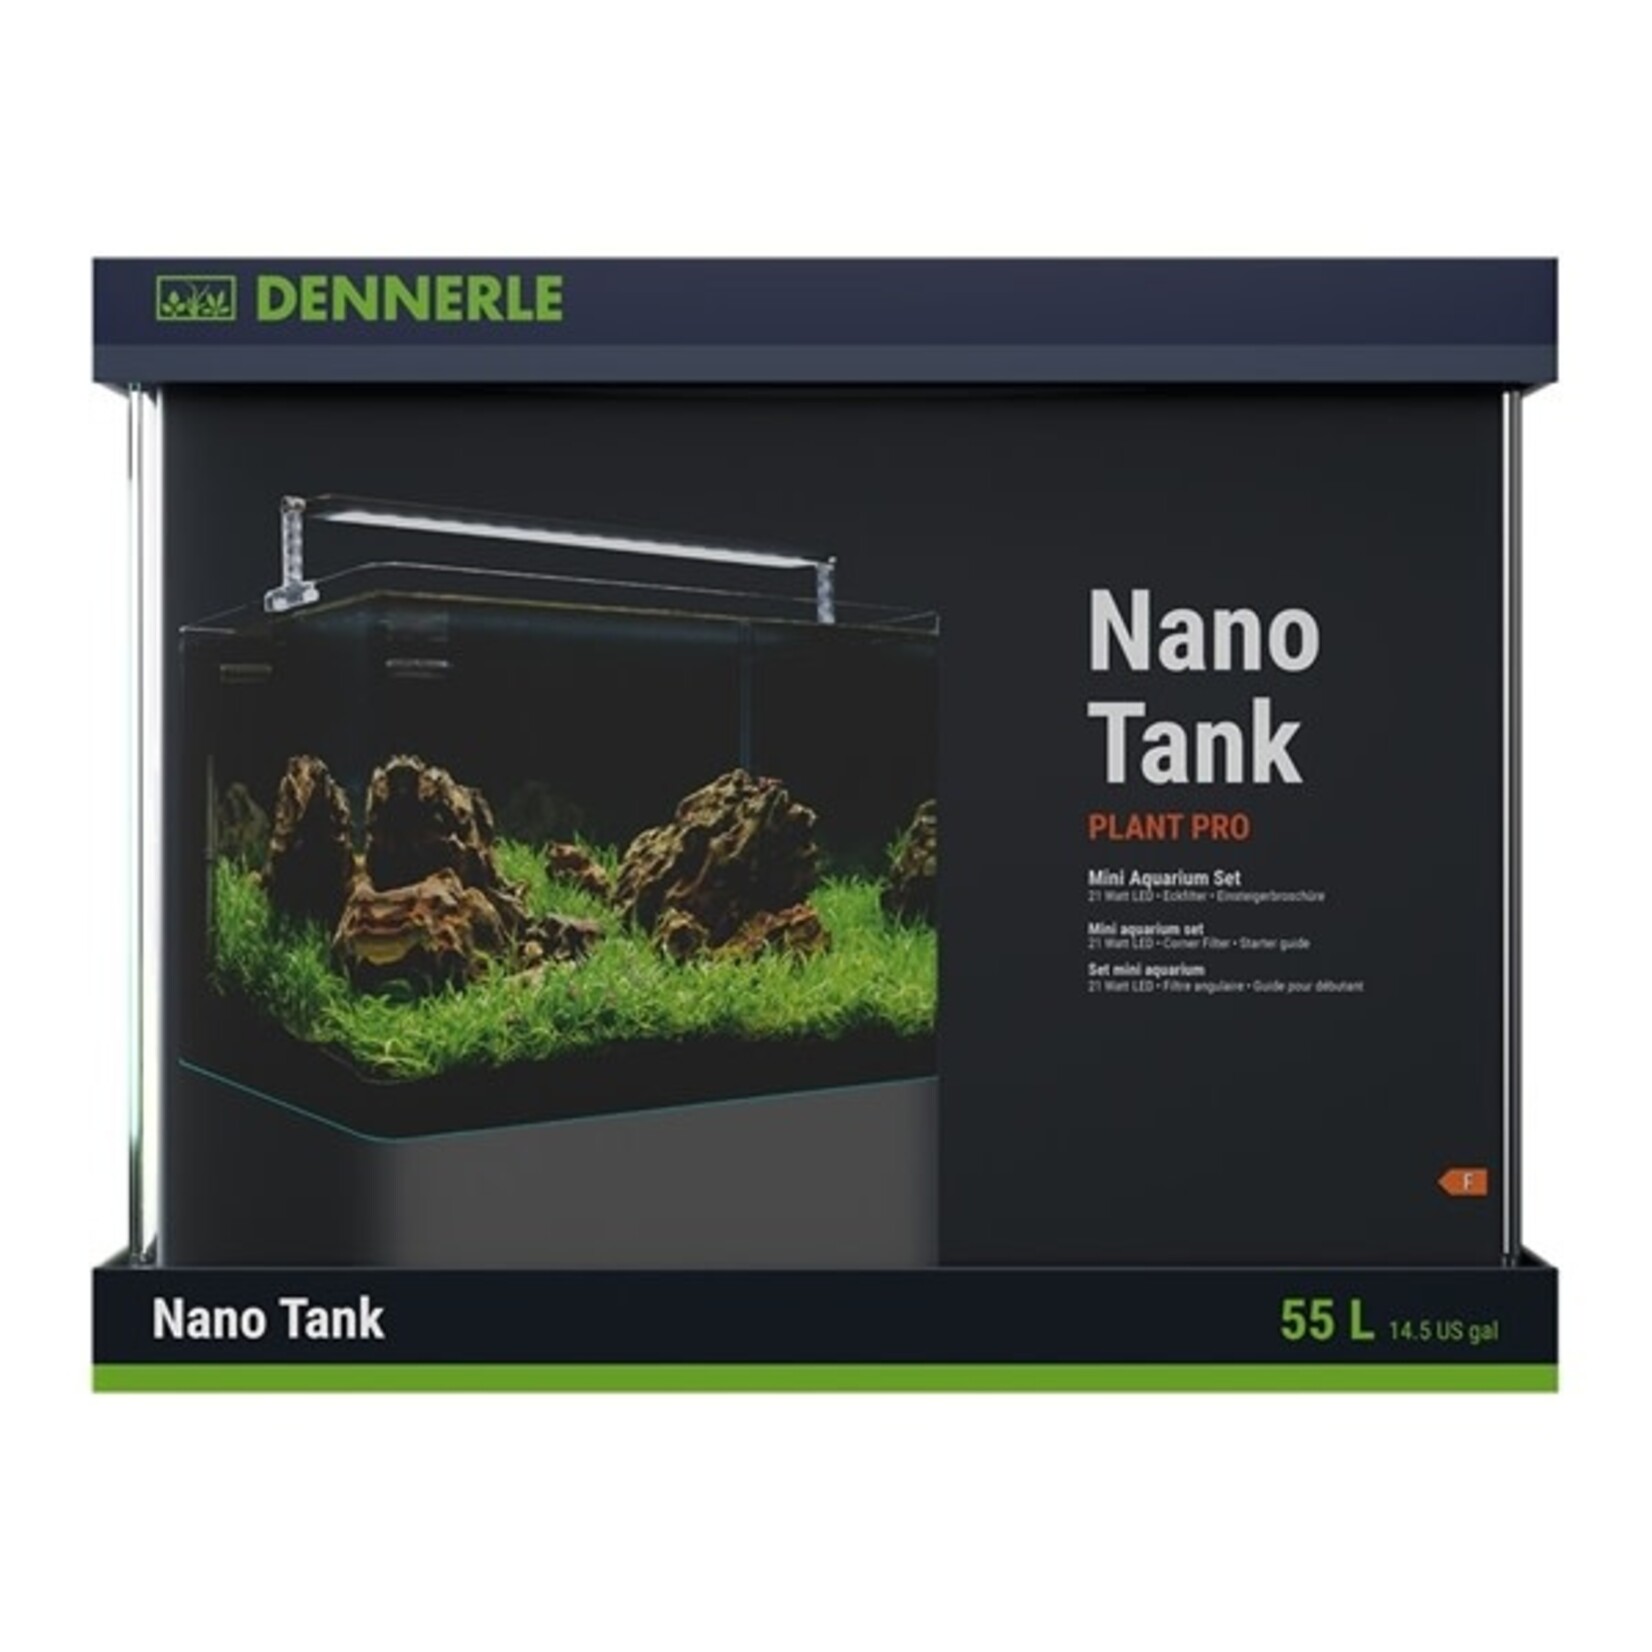 Dennerle nano tank plant pro 55 l